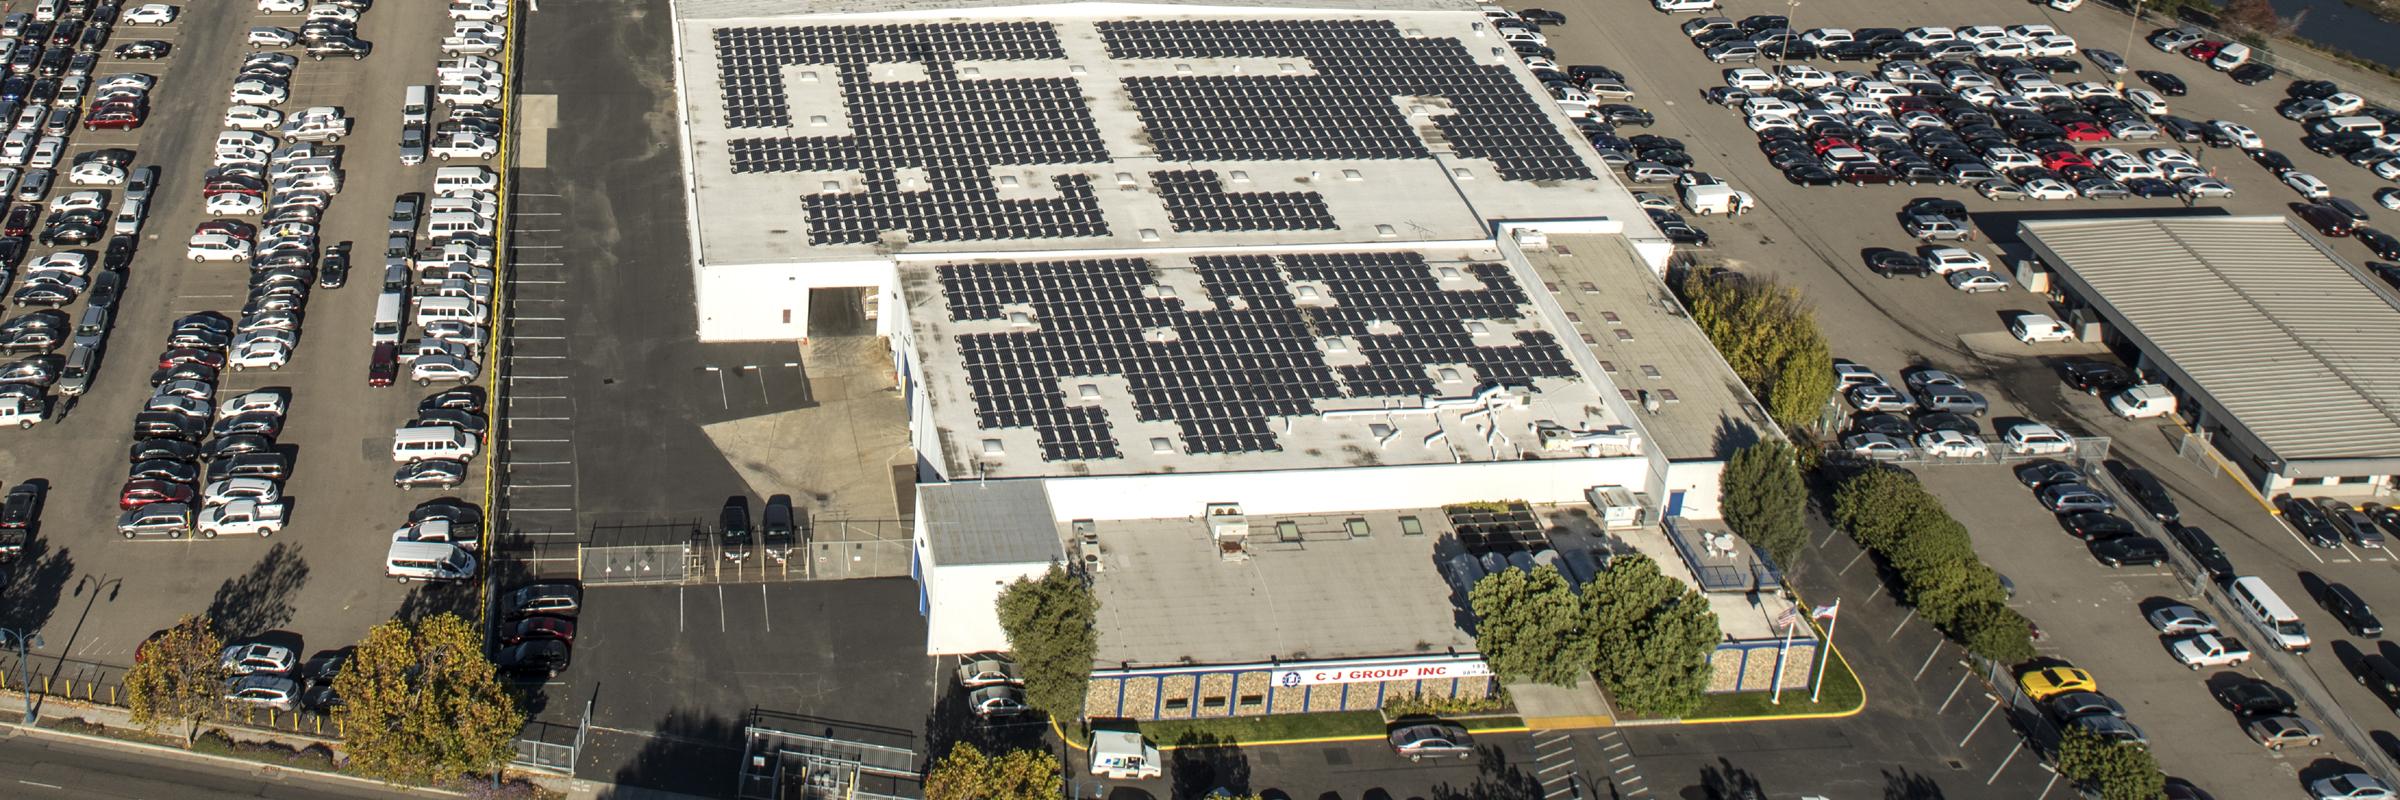 Warehouse solar panel array